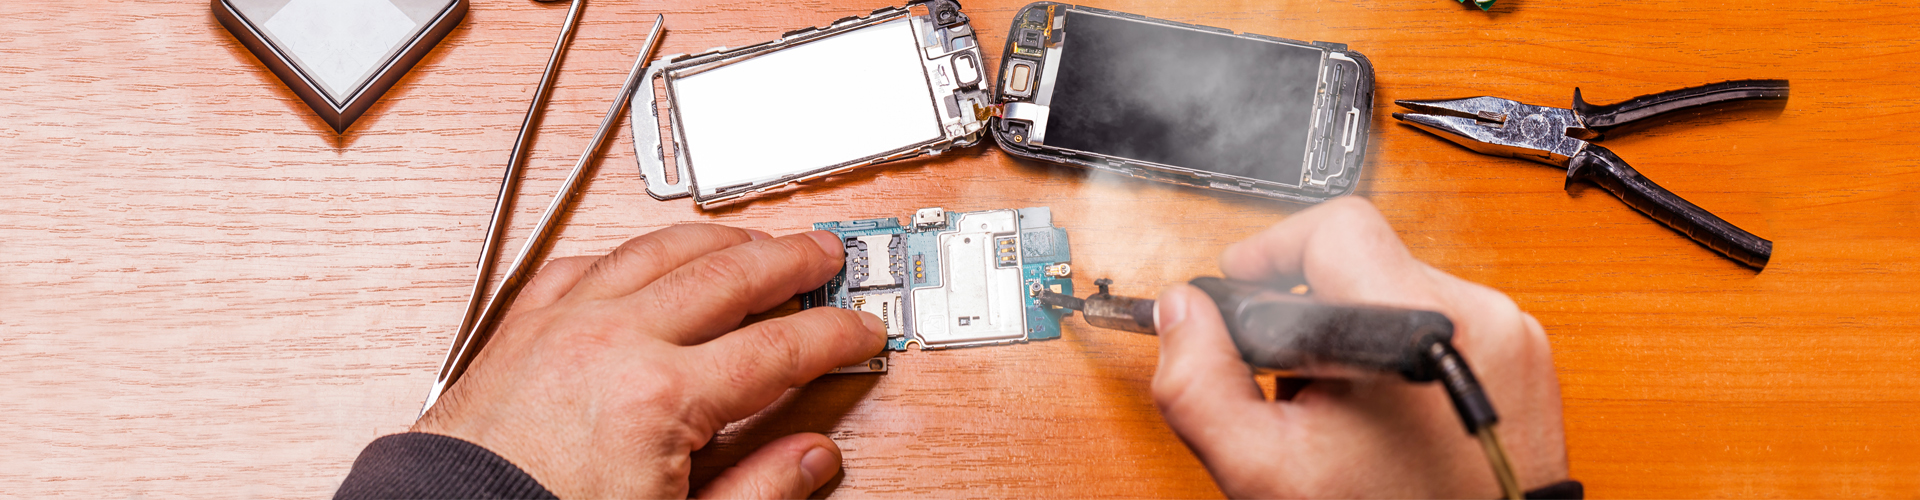 a technician soldering a phone